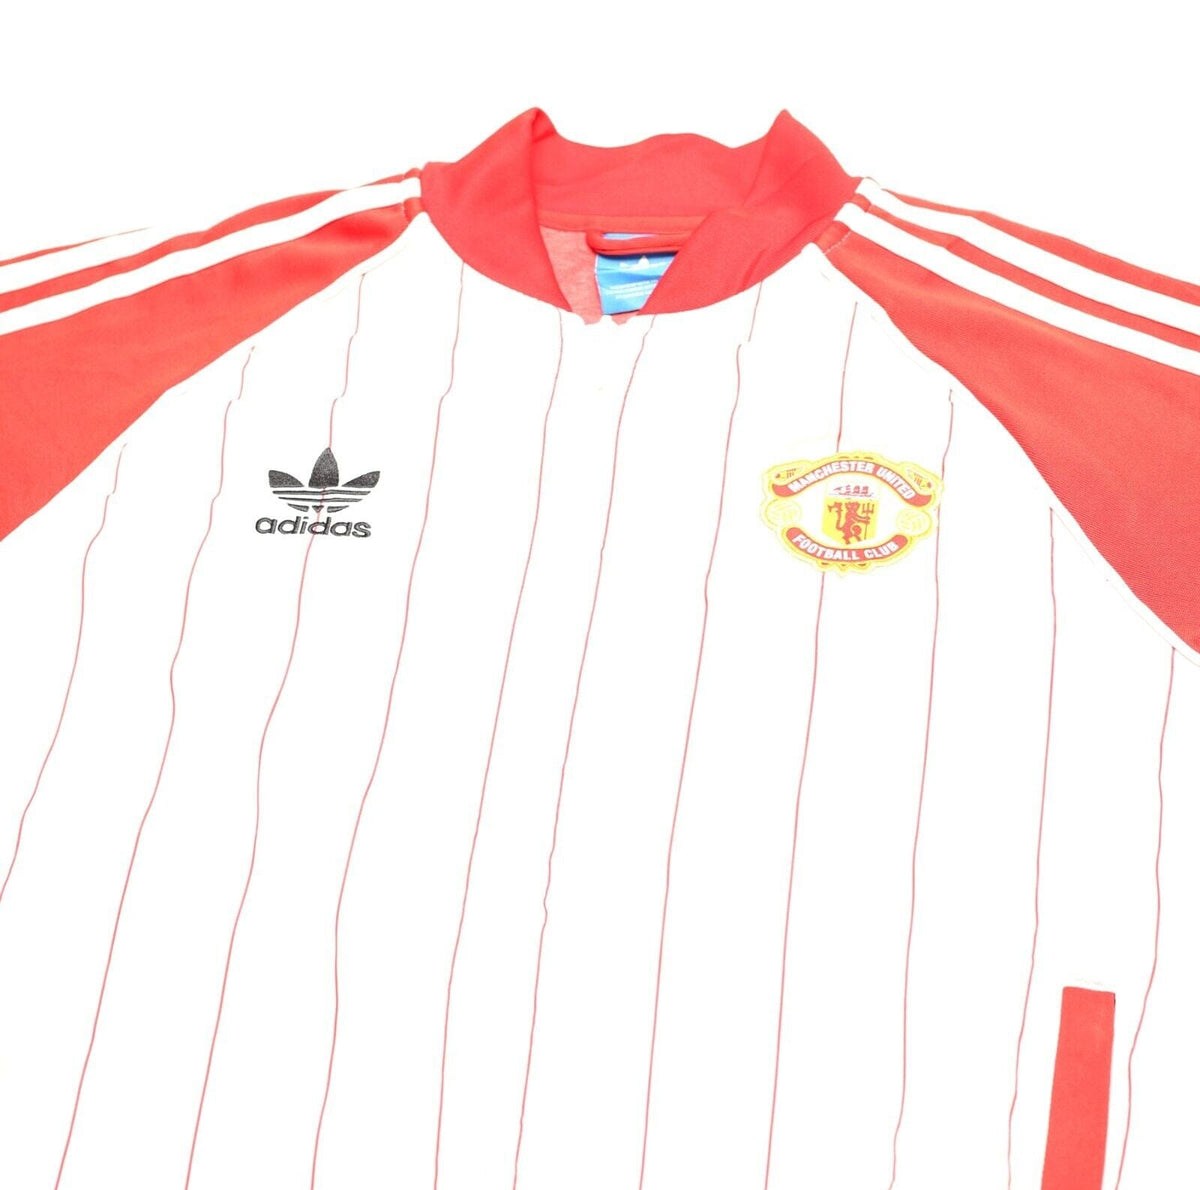 1990/91 Man Utd Away Football Shirt / Old Vintage Umbro Soccer Jersey